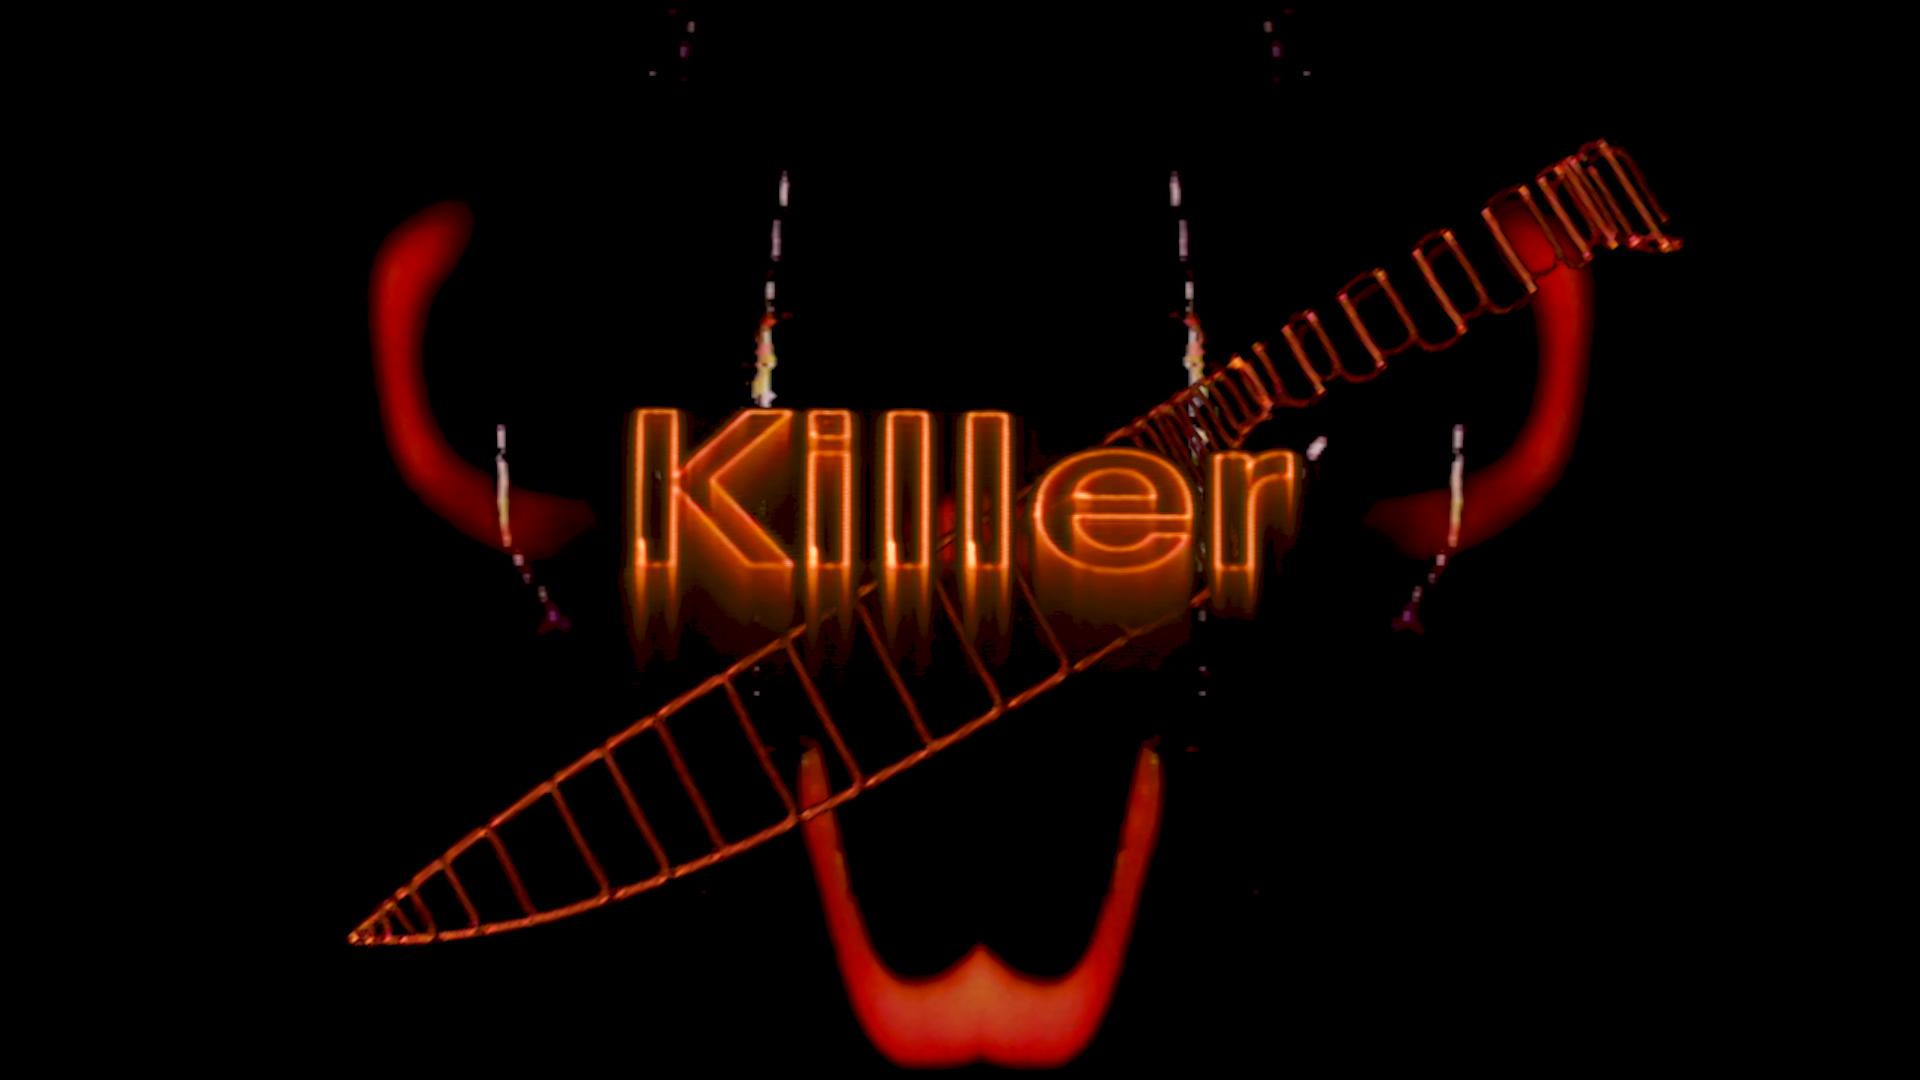 CHVRCHES - Killer (Lyric Video)